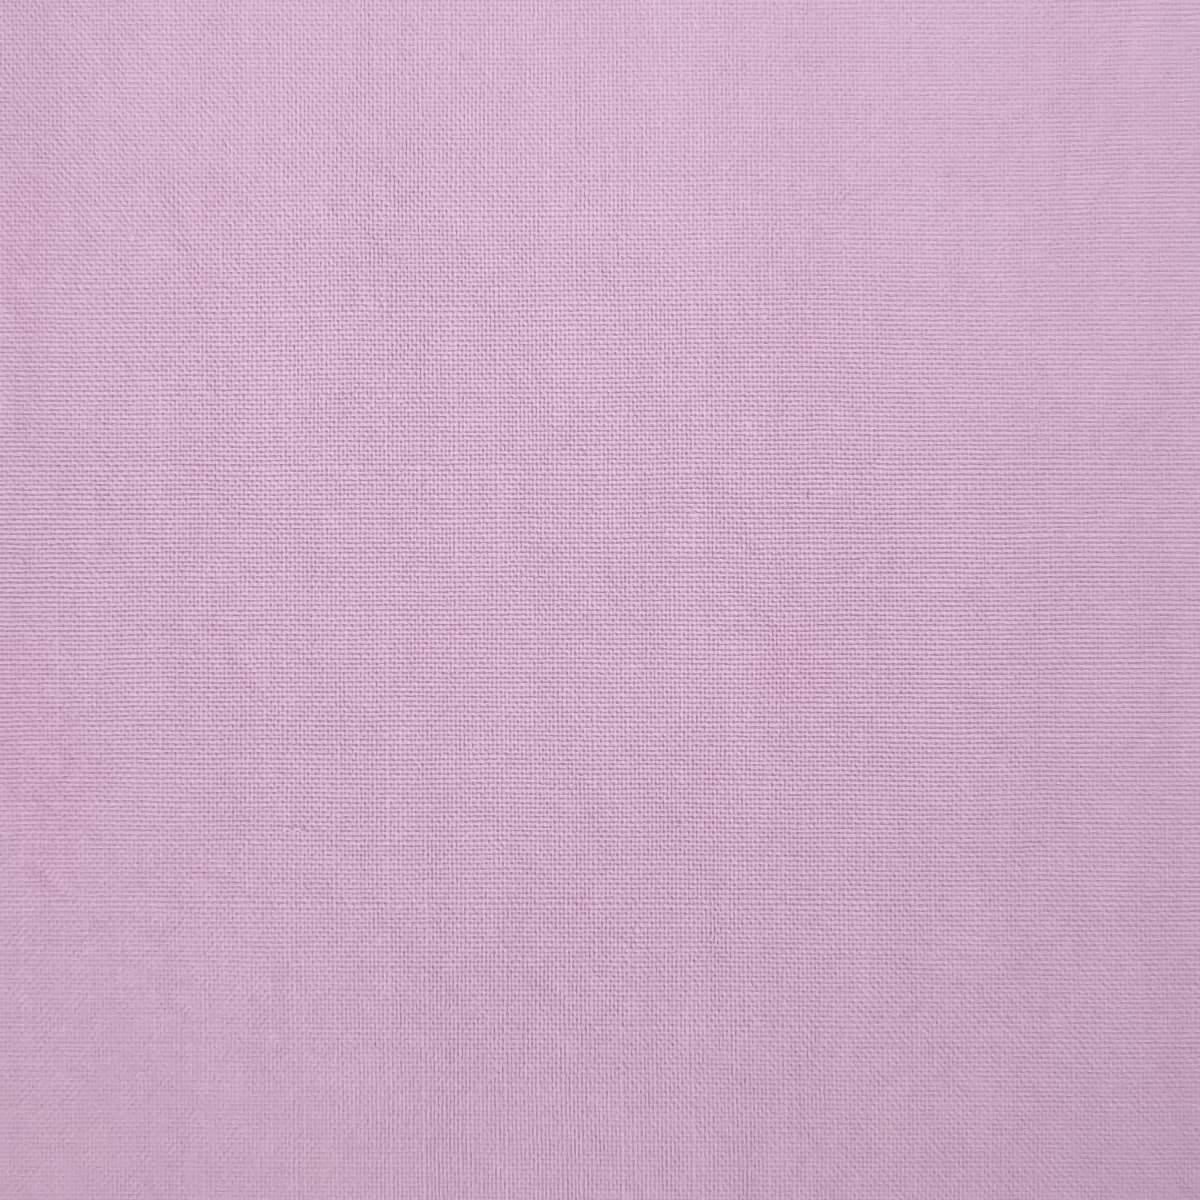 Cotton Woven Fabric | FAB1183 | 1.London Hue, 2.Padua, 3.Sundance, 4.Gum Leaf, 5.Fern, 6.Buttercup, 7.Gold Tips, 8.Melanie, 9.Tumbleweed, 10.Rose by Fabricis.com #